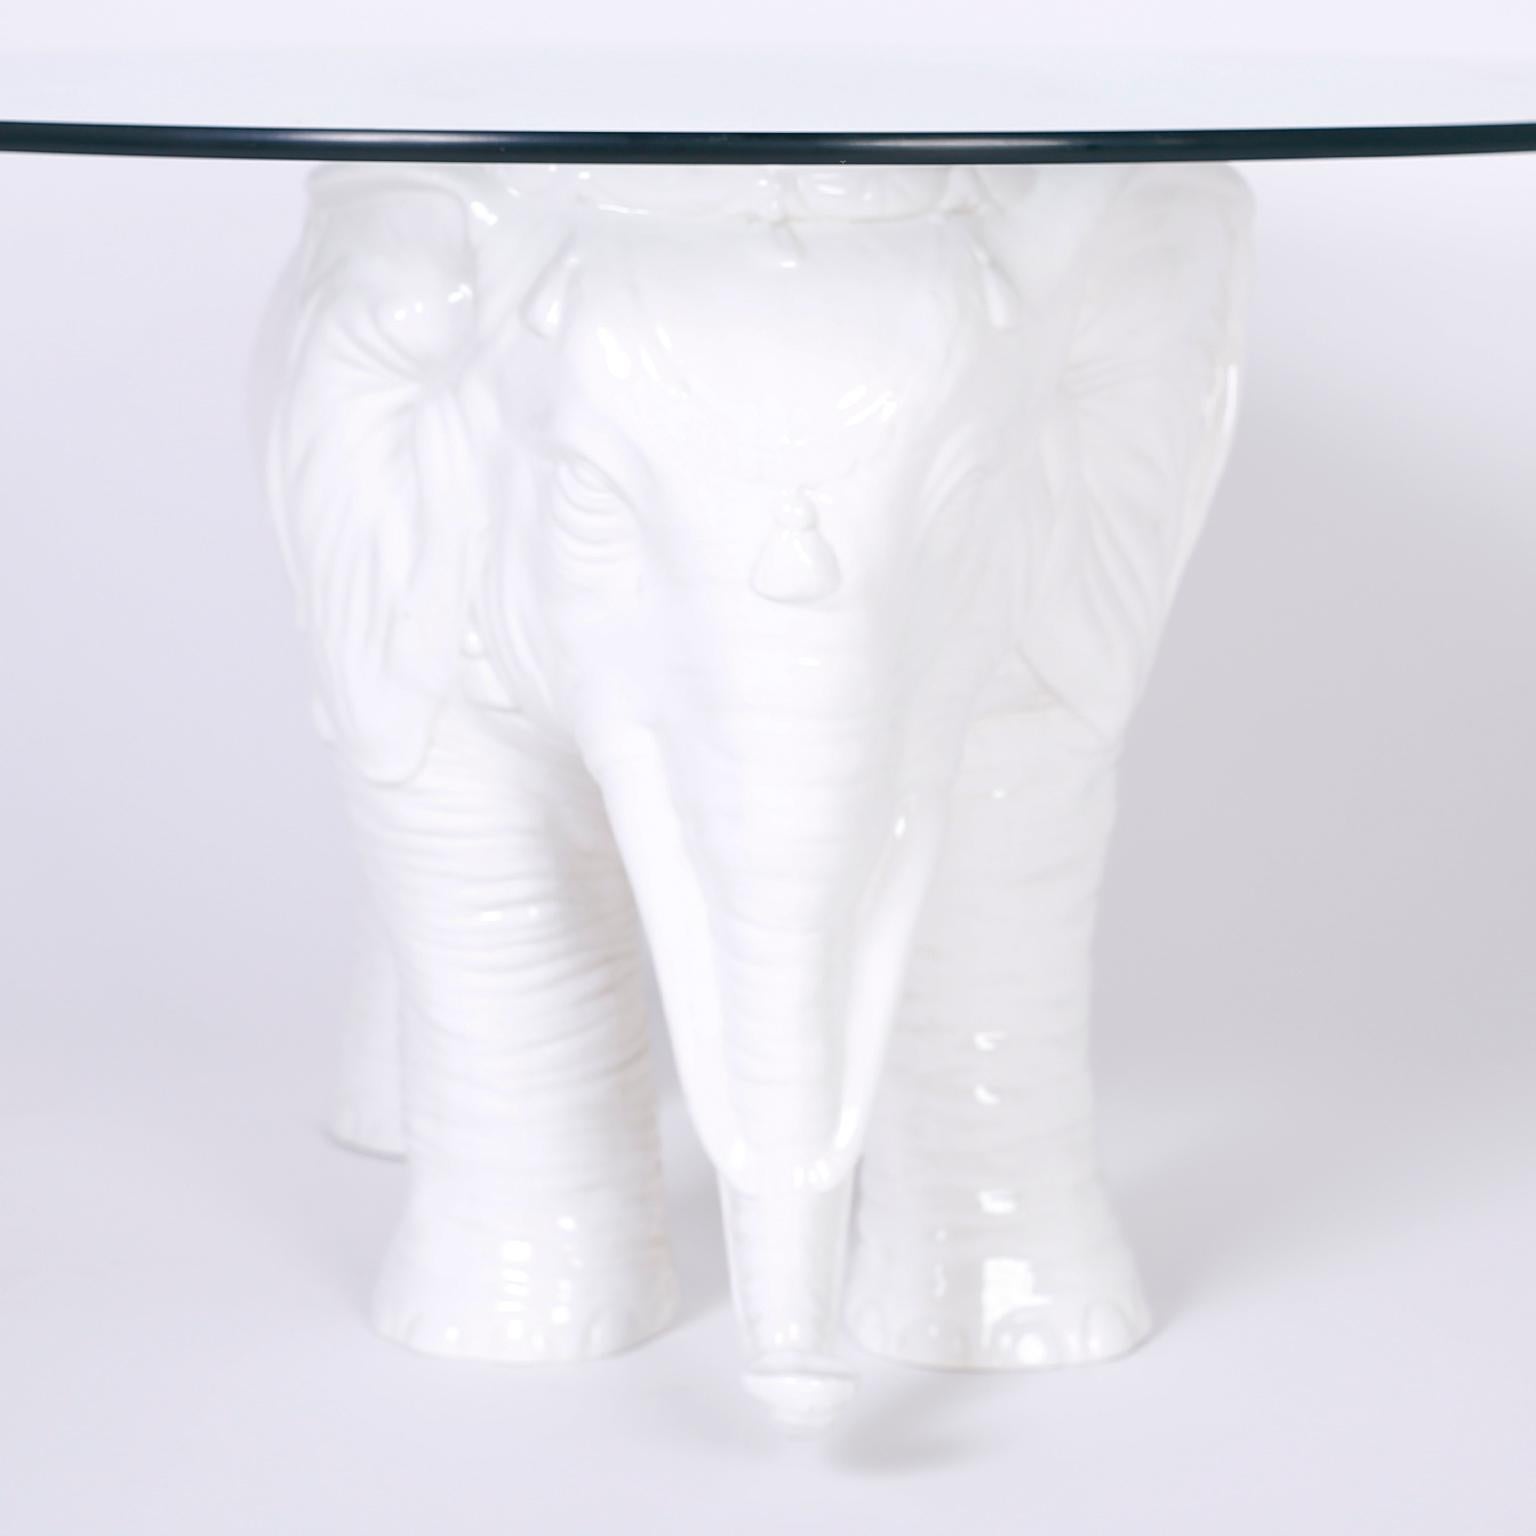 white elephant side table